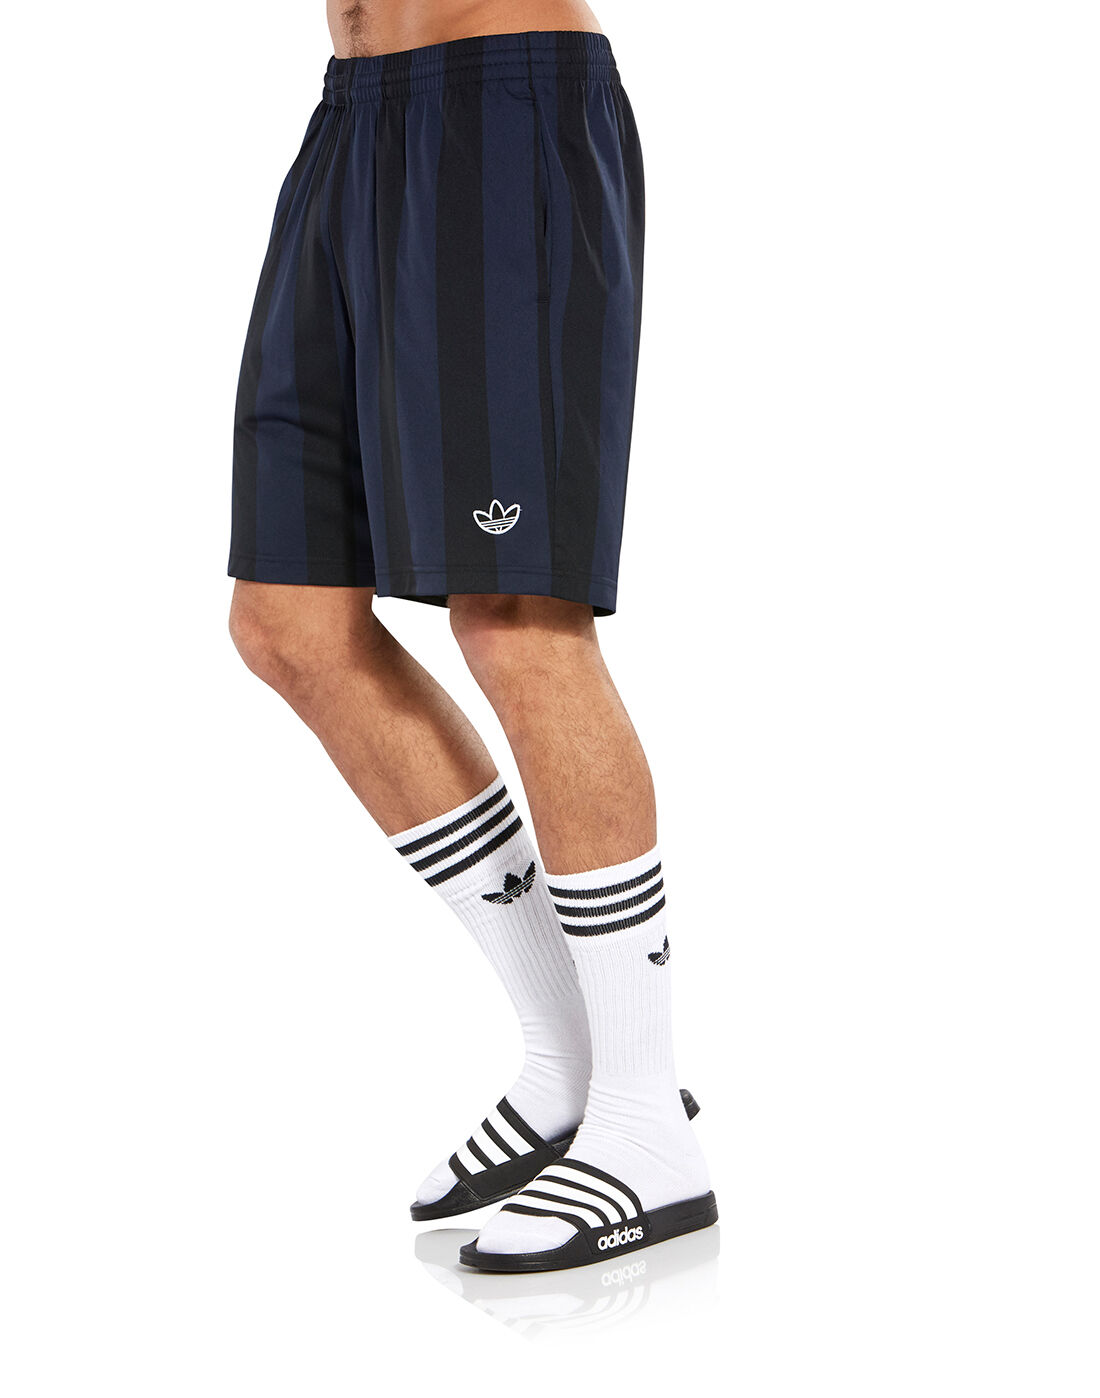 adidas originals shorts navy